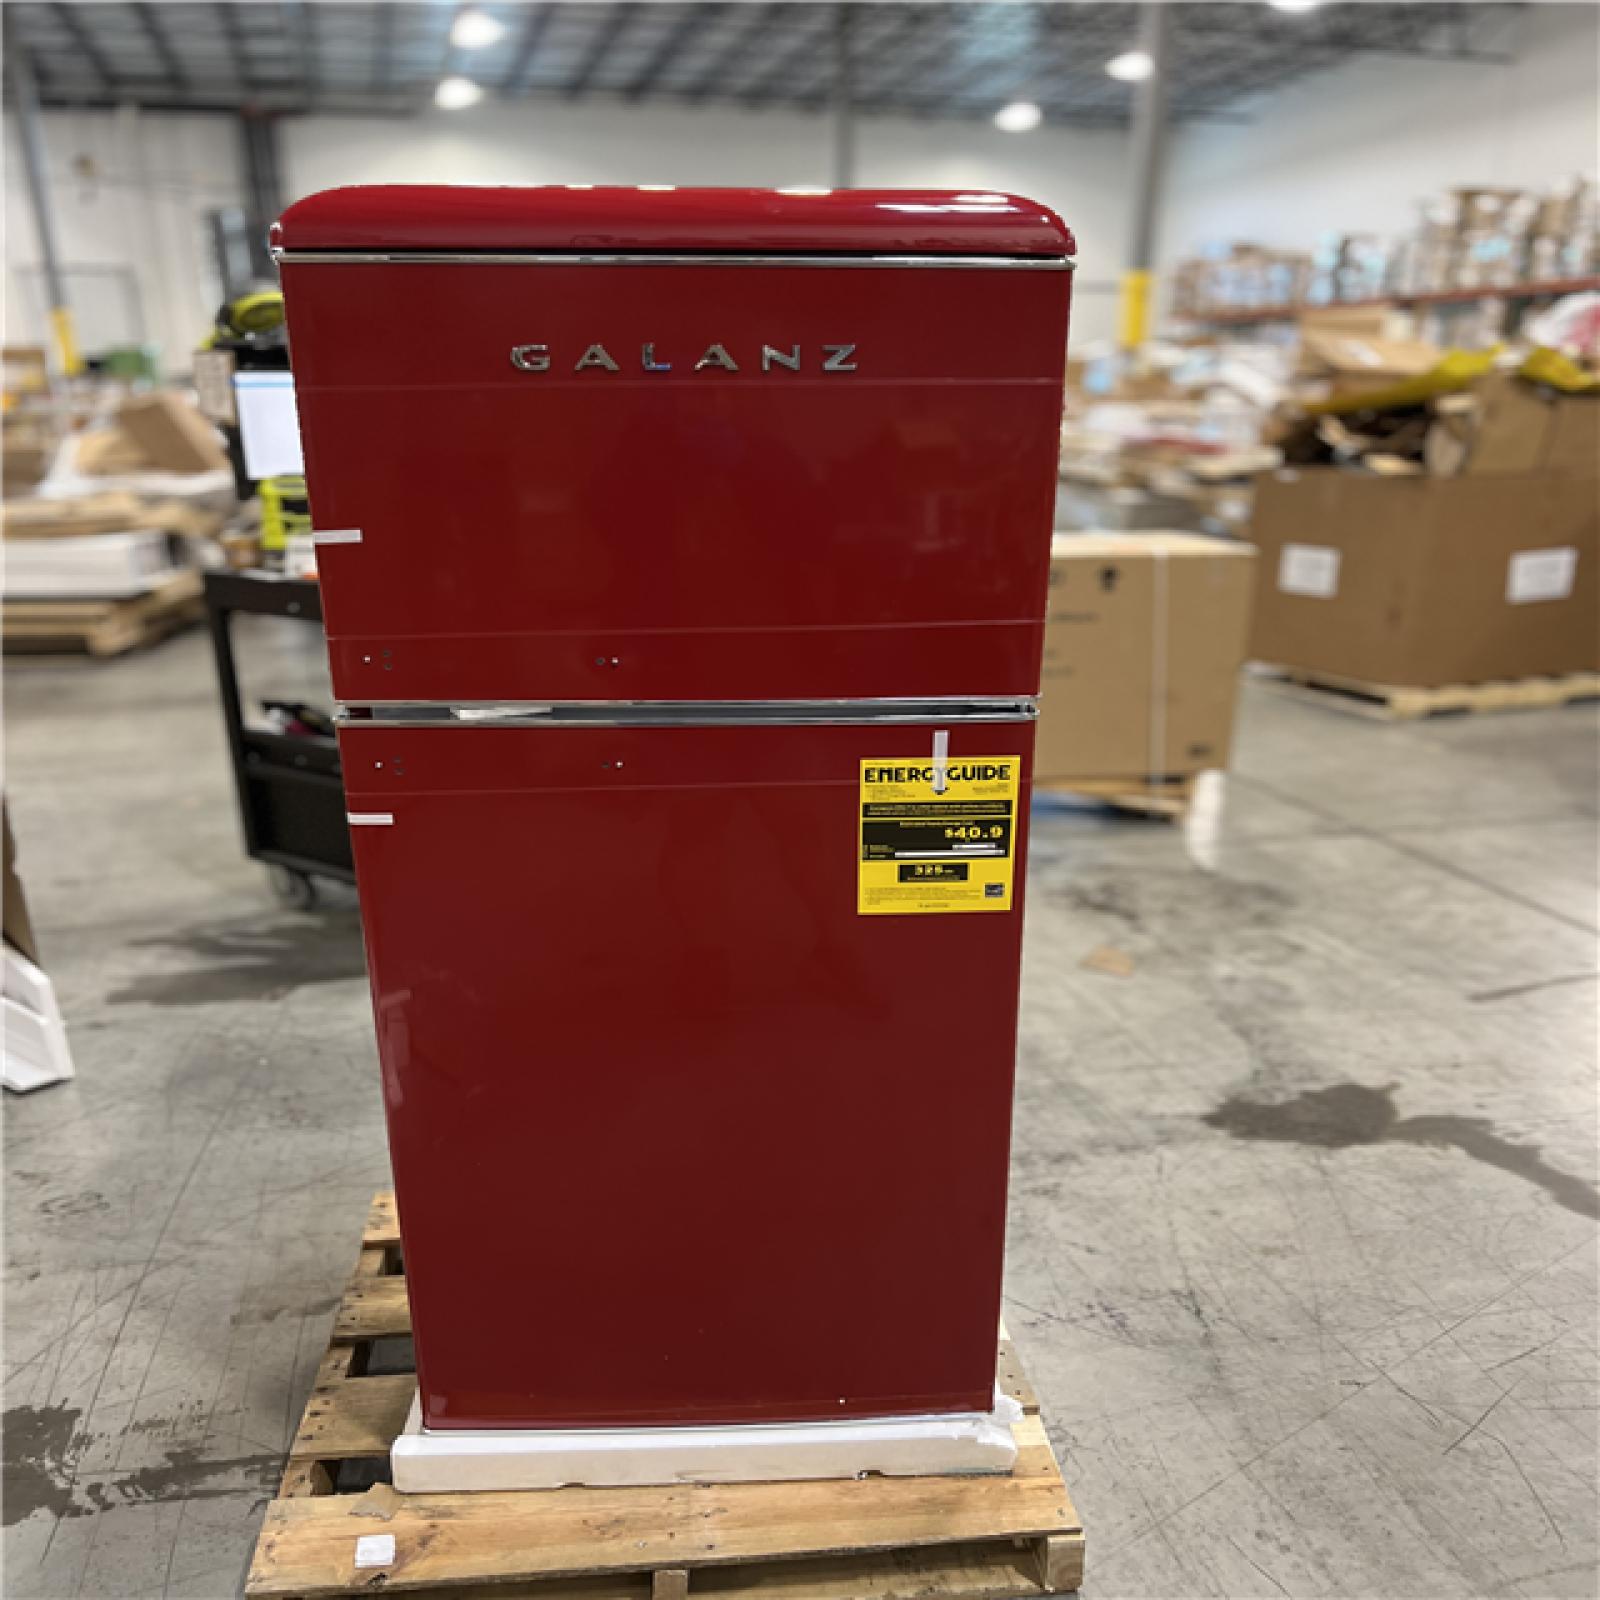 DALLAS LOCATION - Galanz 10.0 cu. ft. Retro Top Freezer Refrigerator with Dual Door True Freezer, Frost Free in Red